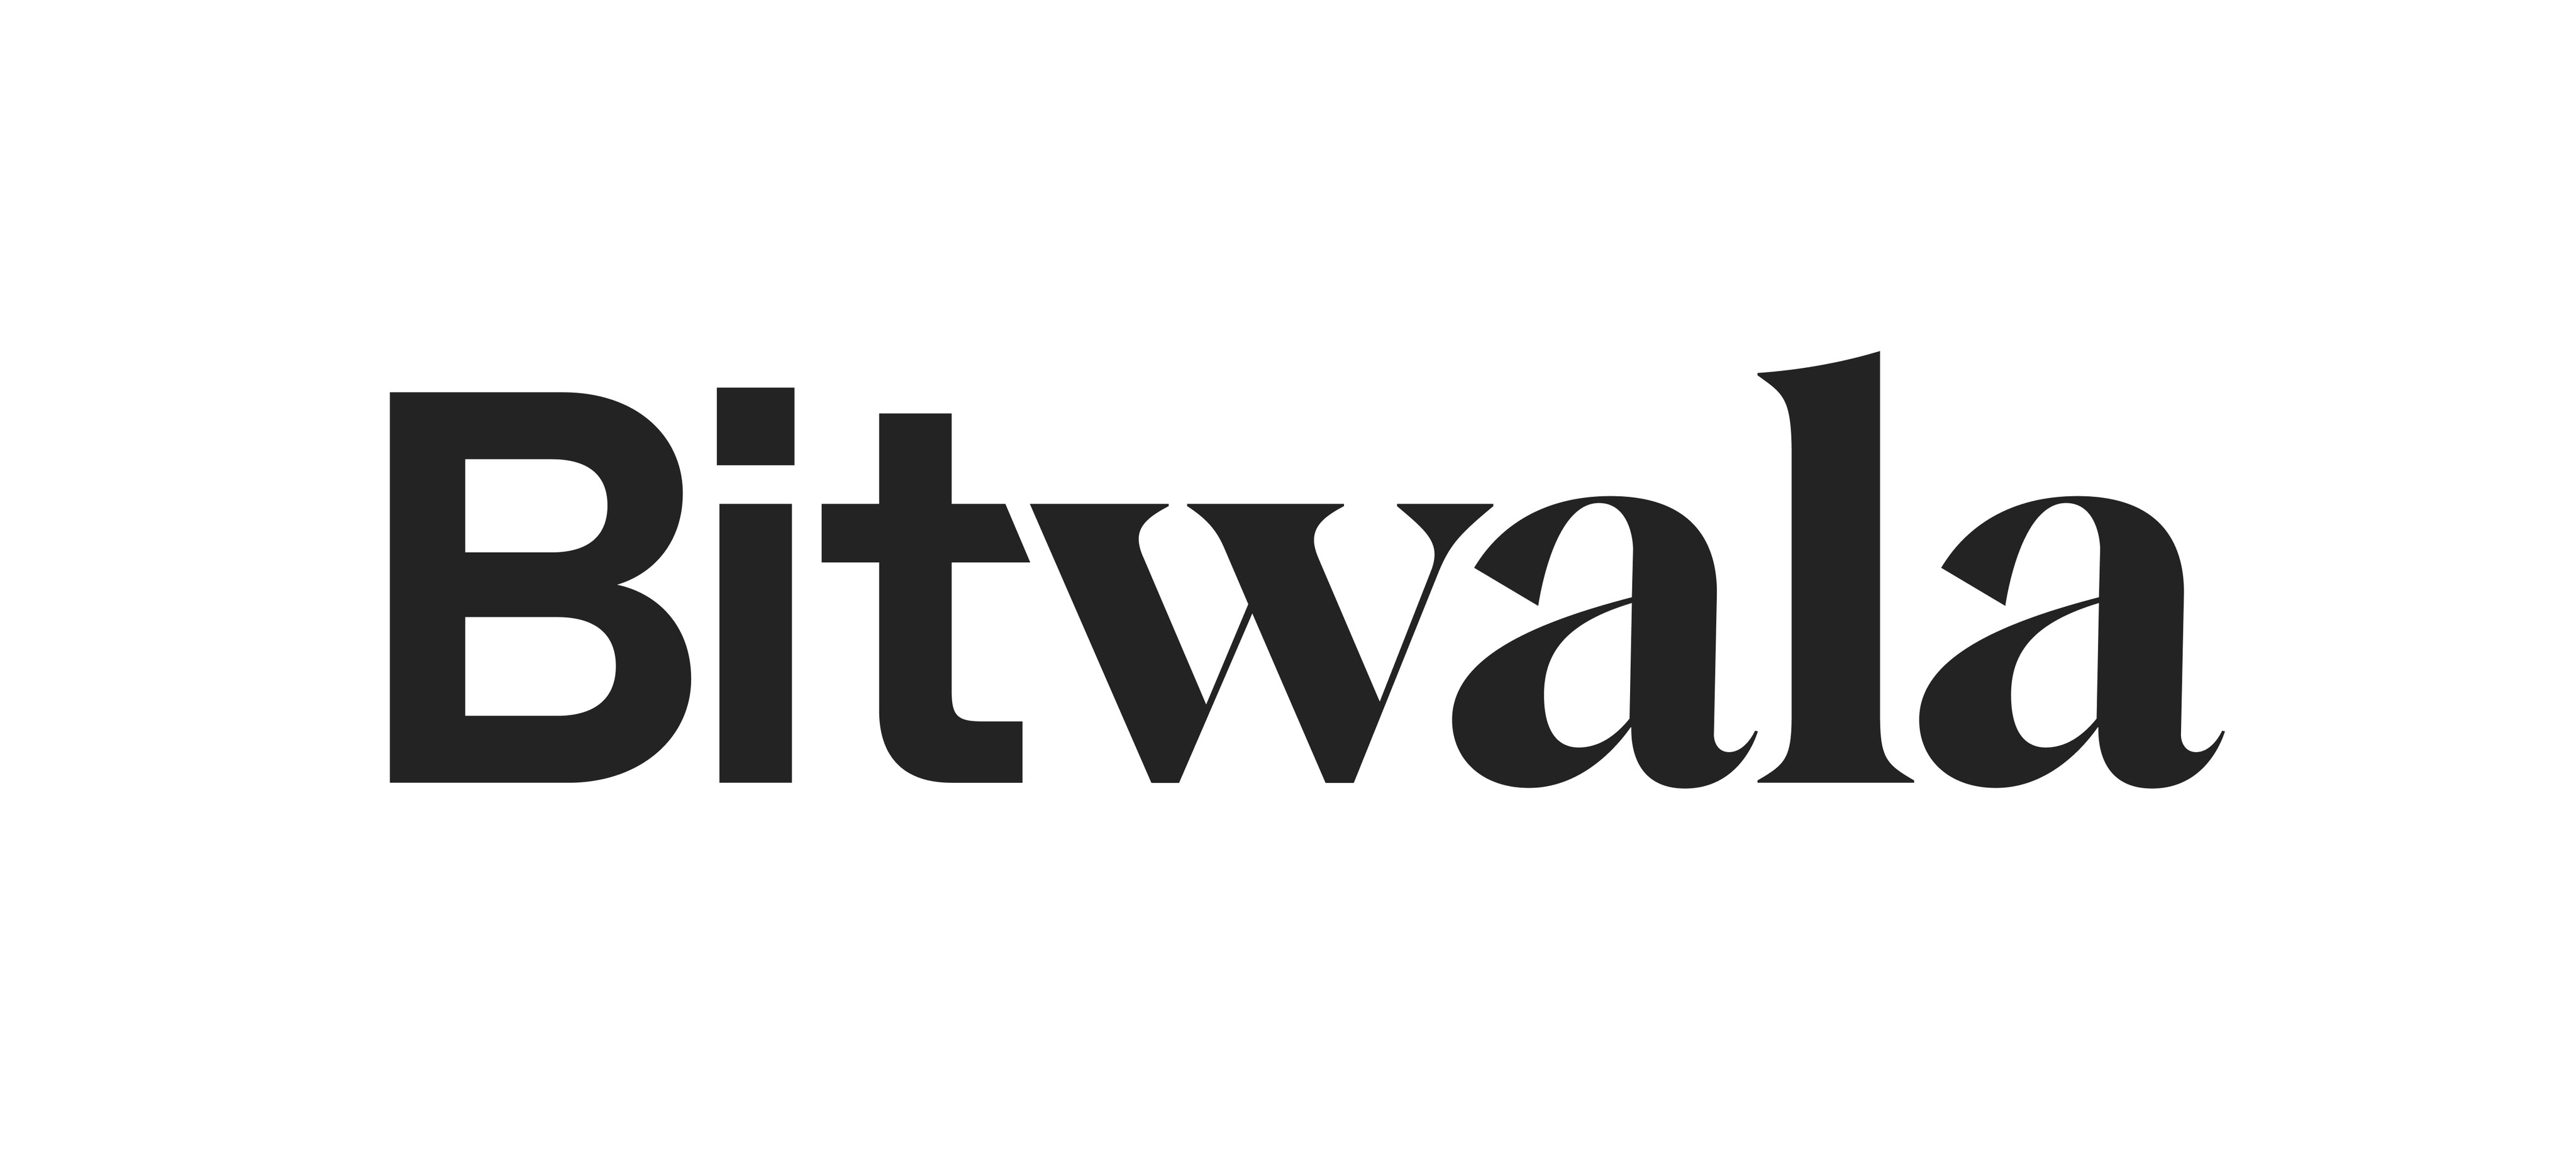 www.bitwala.com